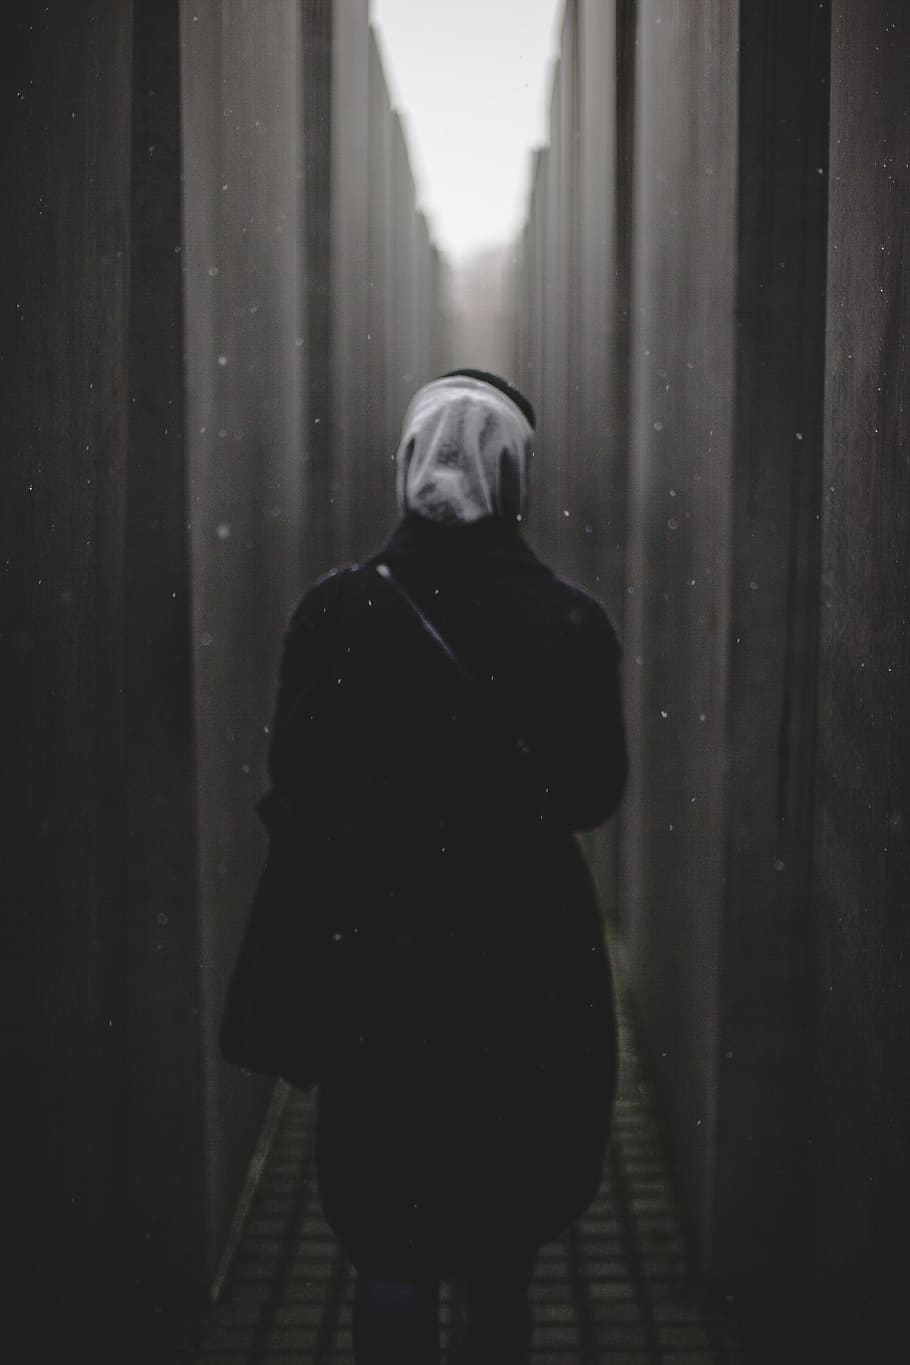 HD wallpaper: Person Walking Between Walls, berlin, black and white ...